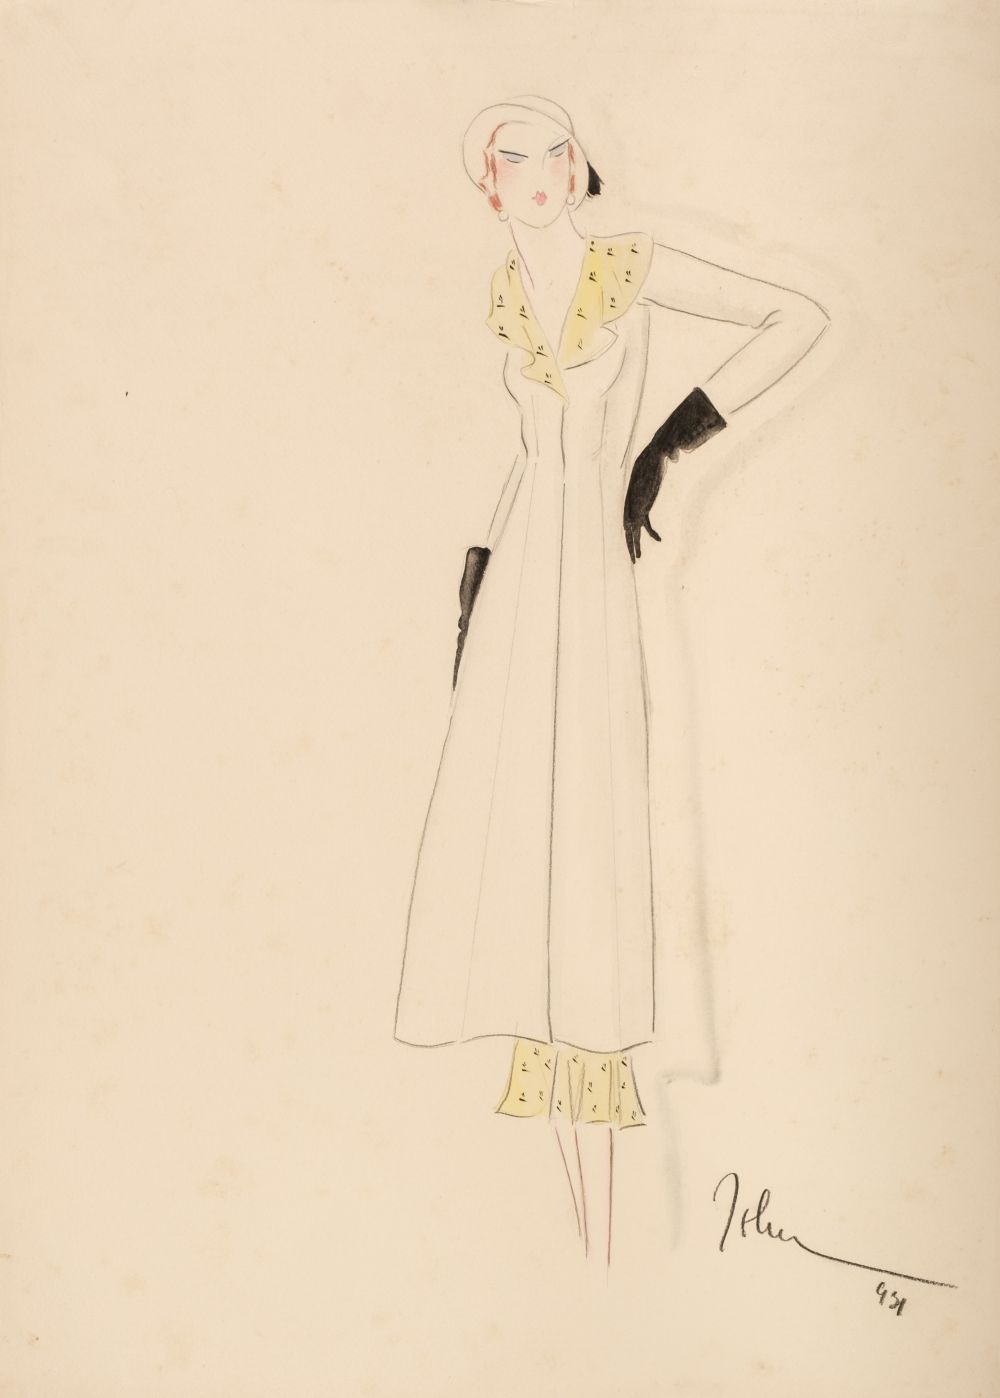 * Guida (John, 1896-1965). Fashion design for a long coat, circa 1930